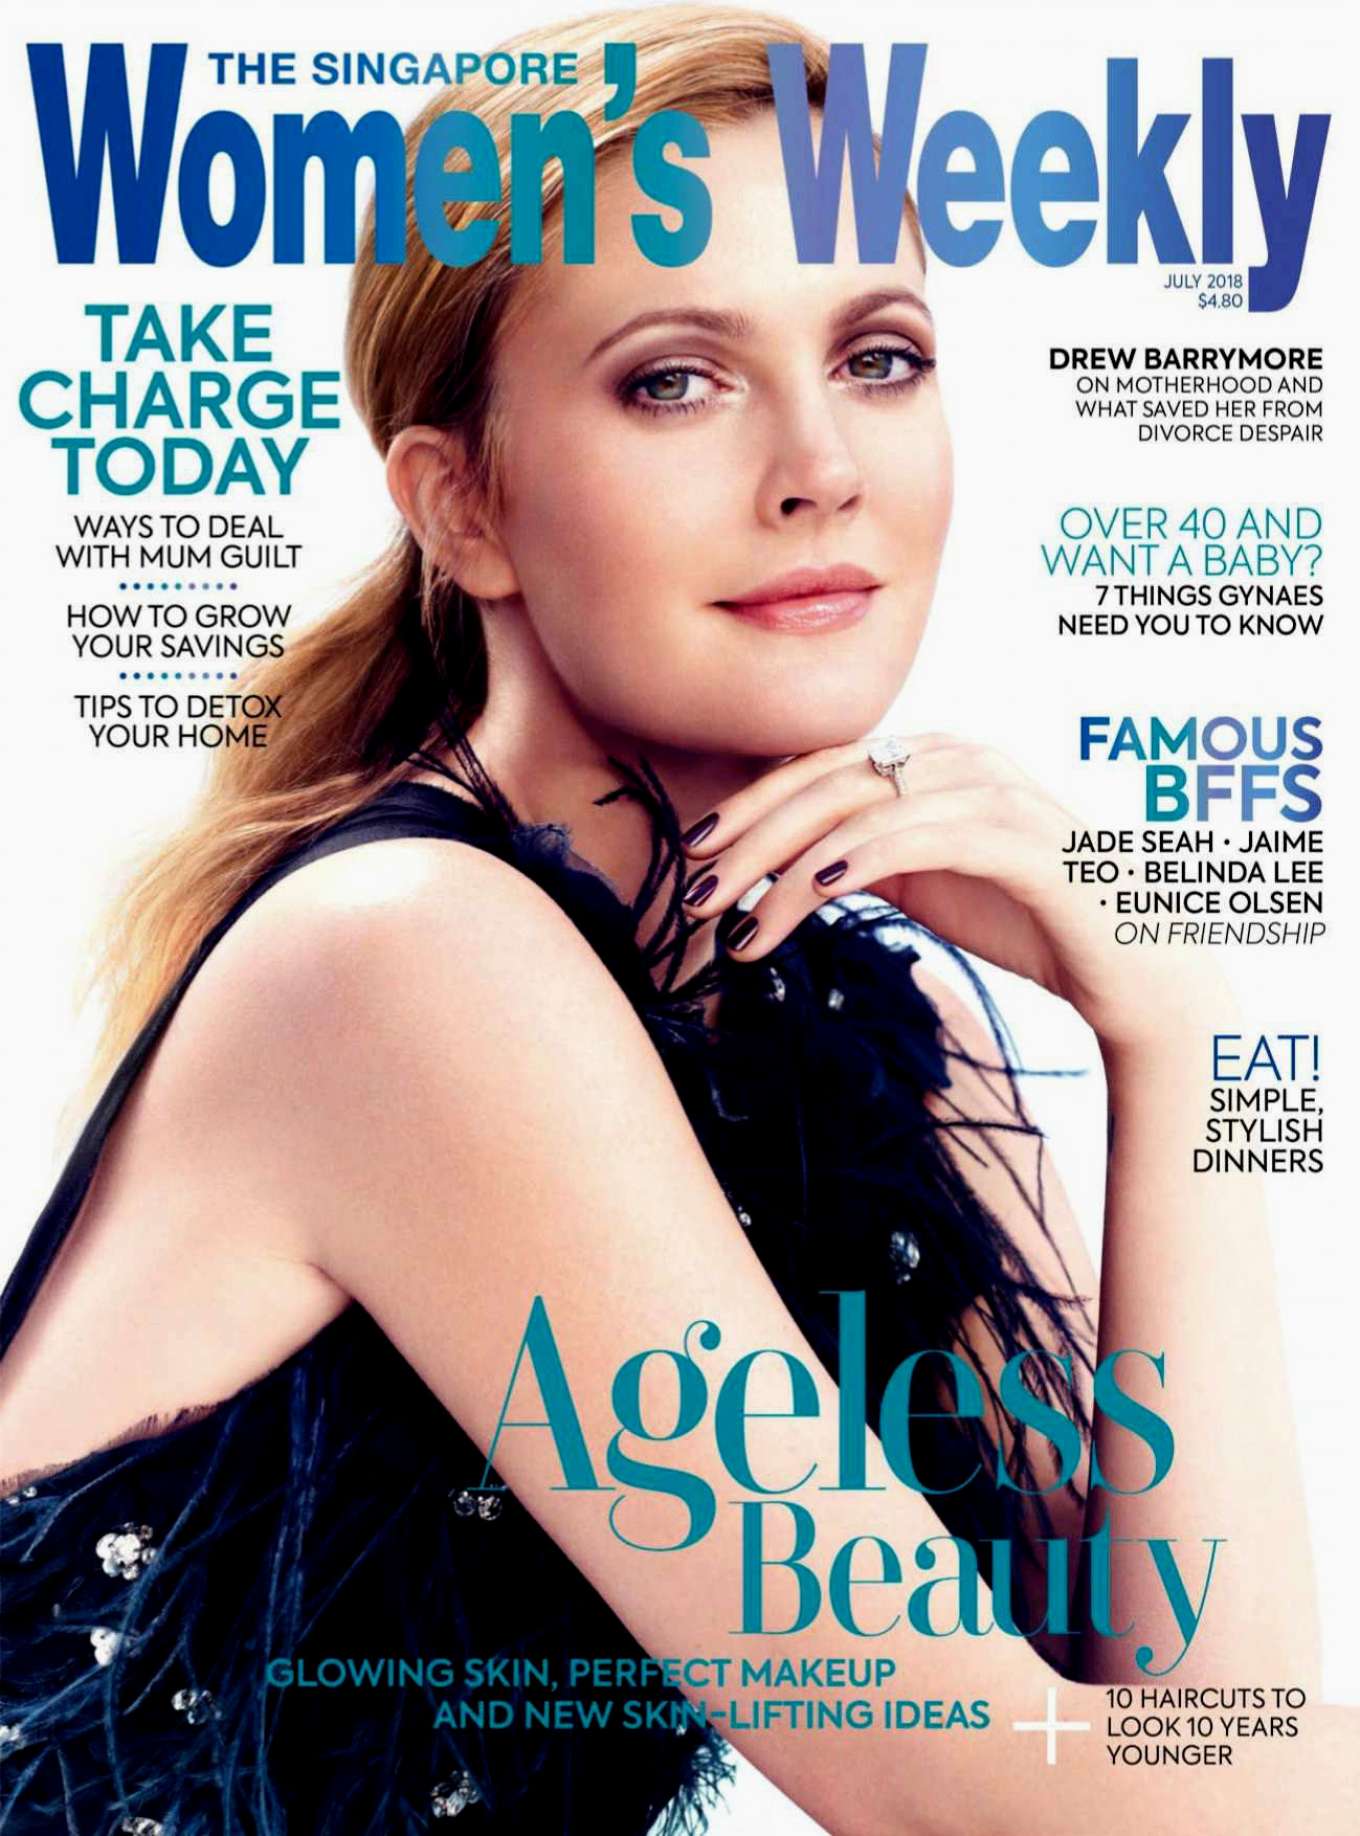 Drew Barrymore â€“ Singapore Womenâ€™s Weekly Magazine (July 2018 issue)